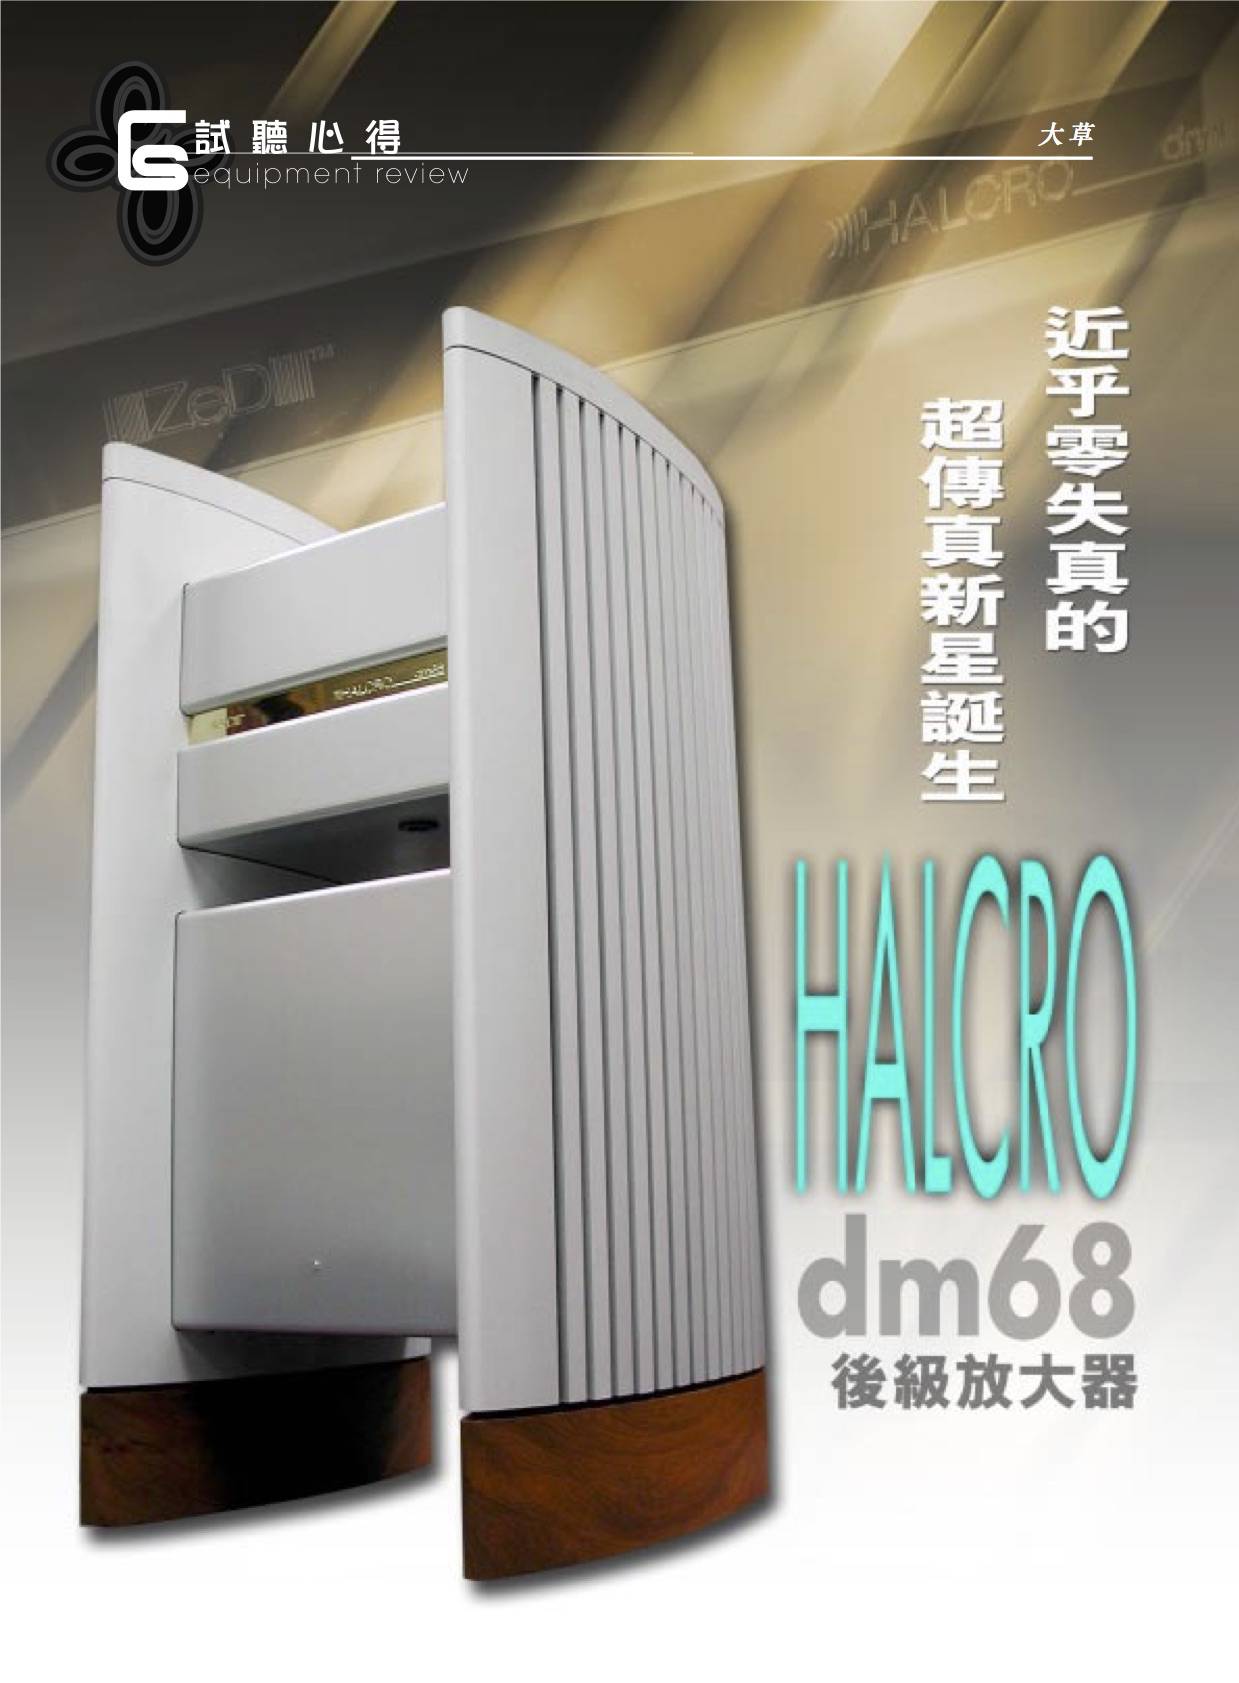 Halcro DM68